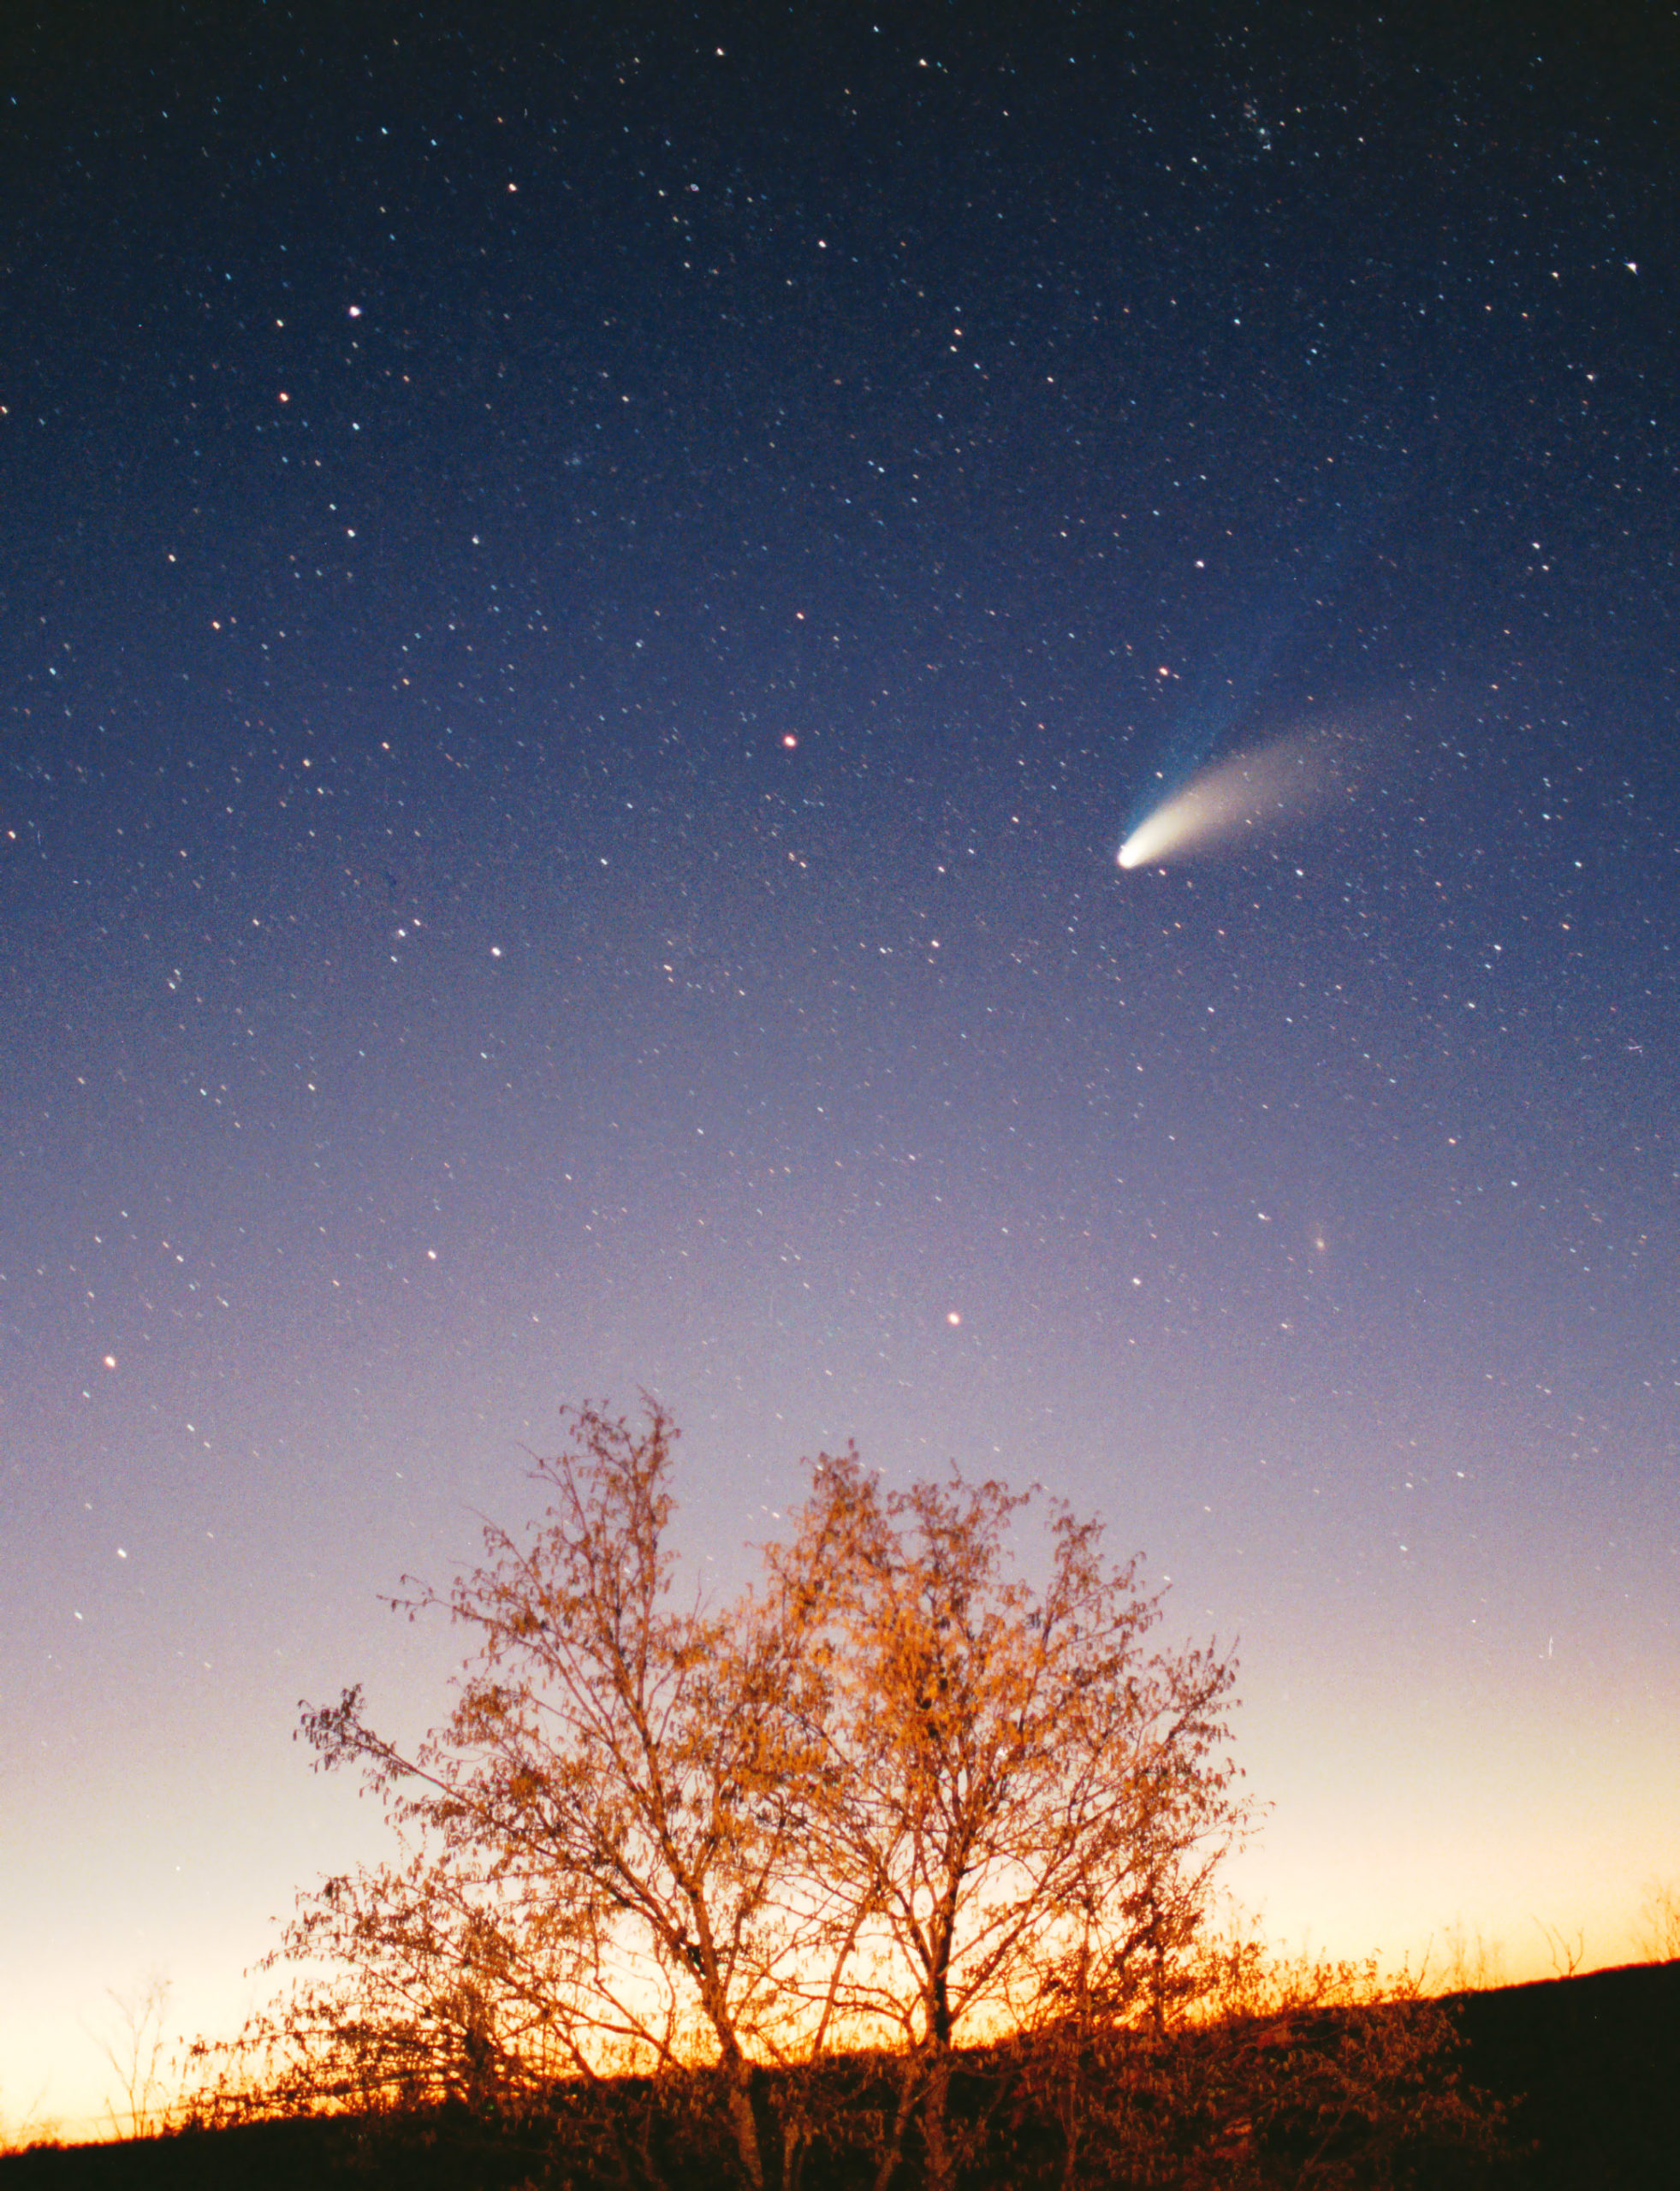 Comet Hale-Bopp, as seen on March 29, 1997. (Image: Philipp Salzgeber)